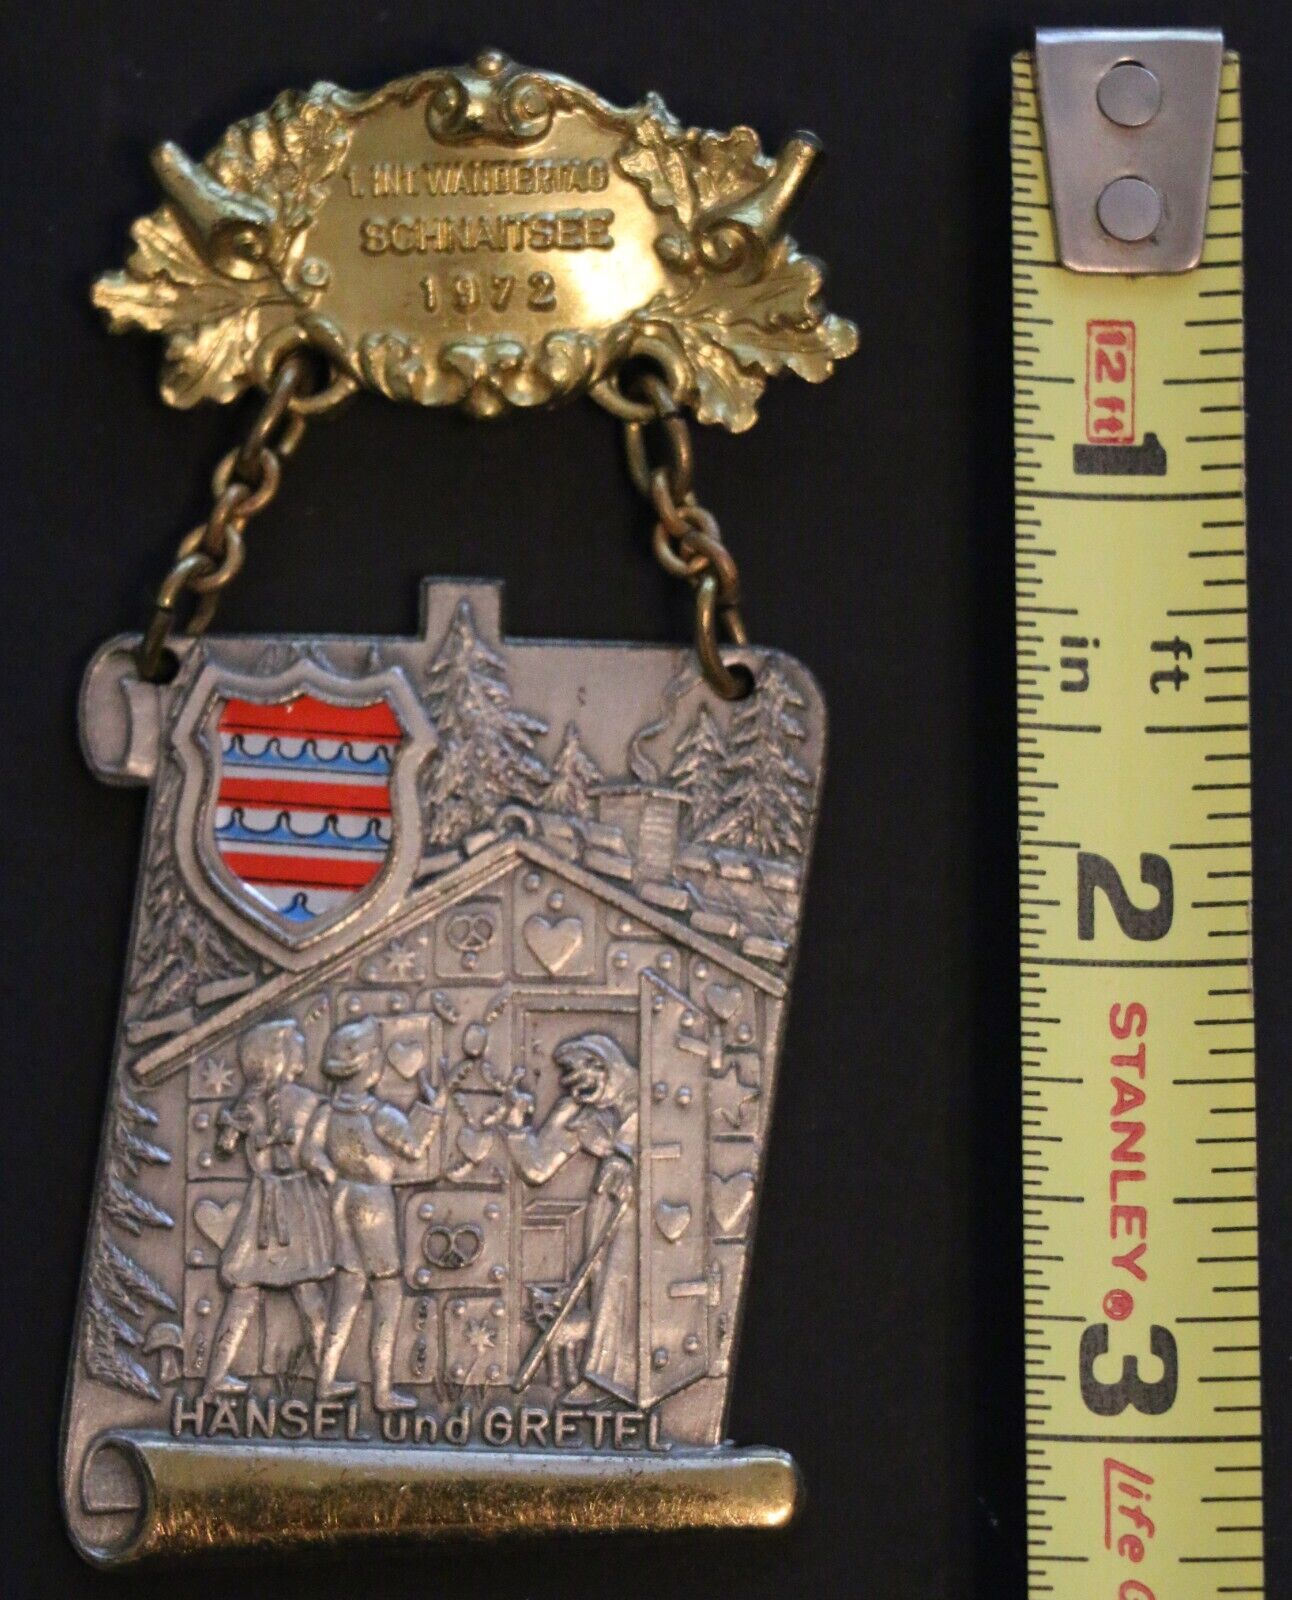 Beautiful Antique German Volksmarch Medal - 1972 - Schnaitsee